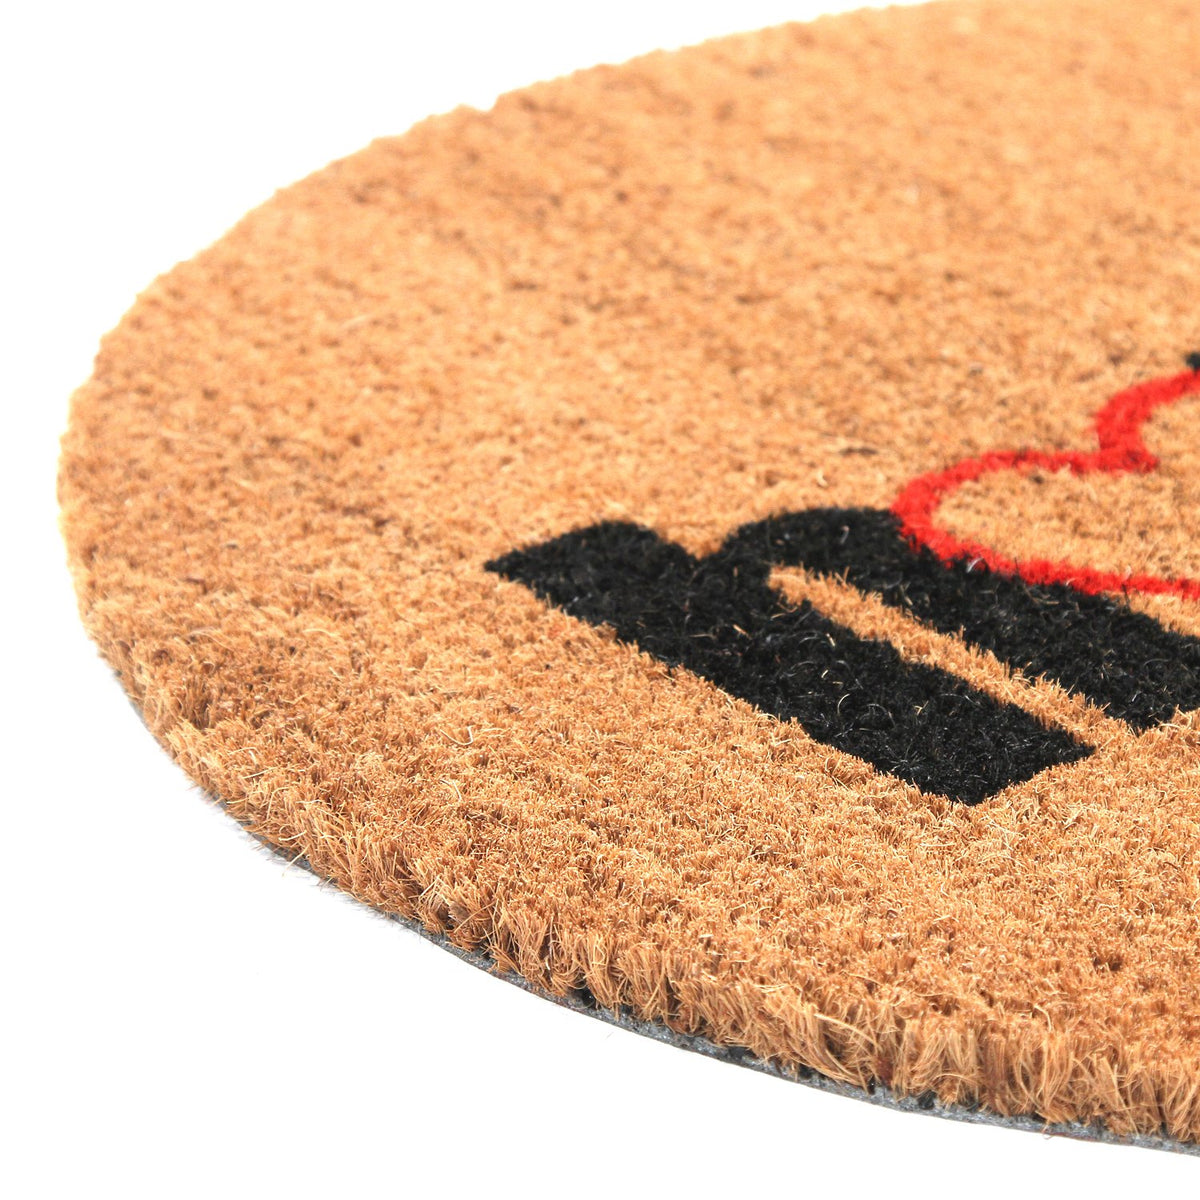 Onlymat Round Shape "Home" Printed Natural Coir Anti Slip Doormat - OnlyMat